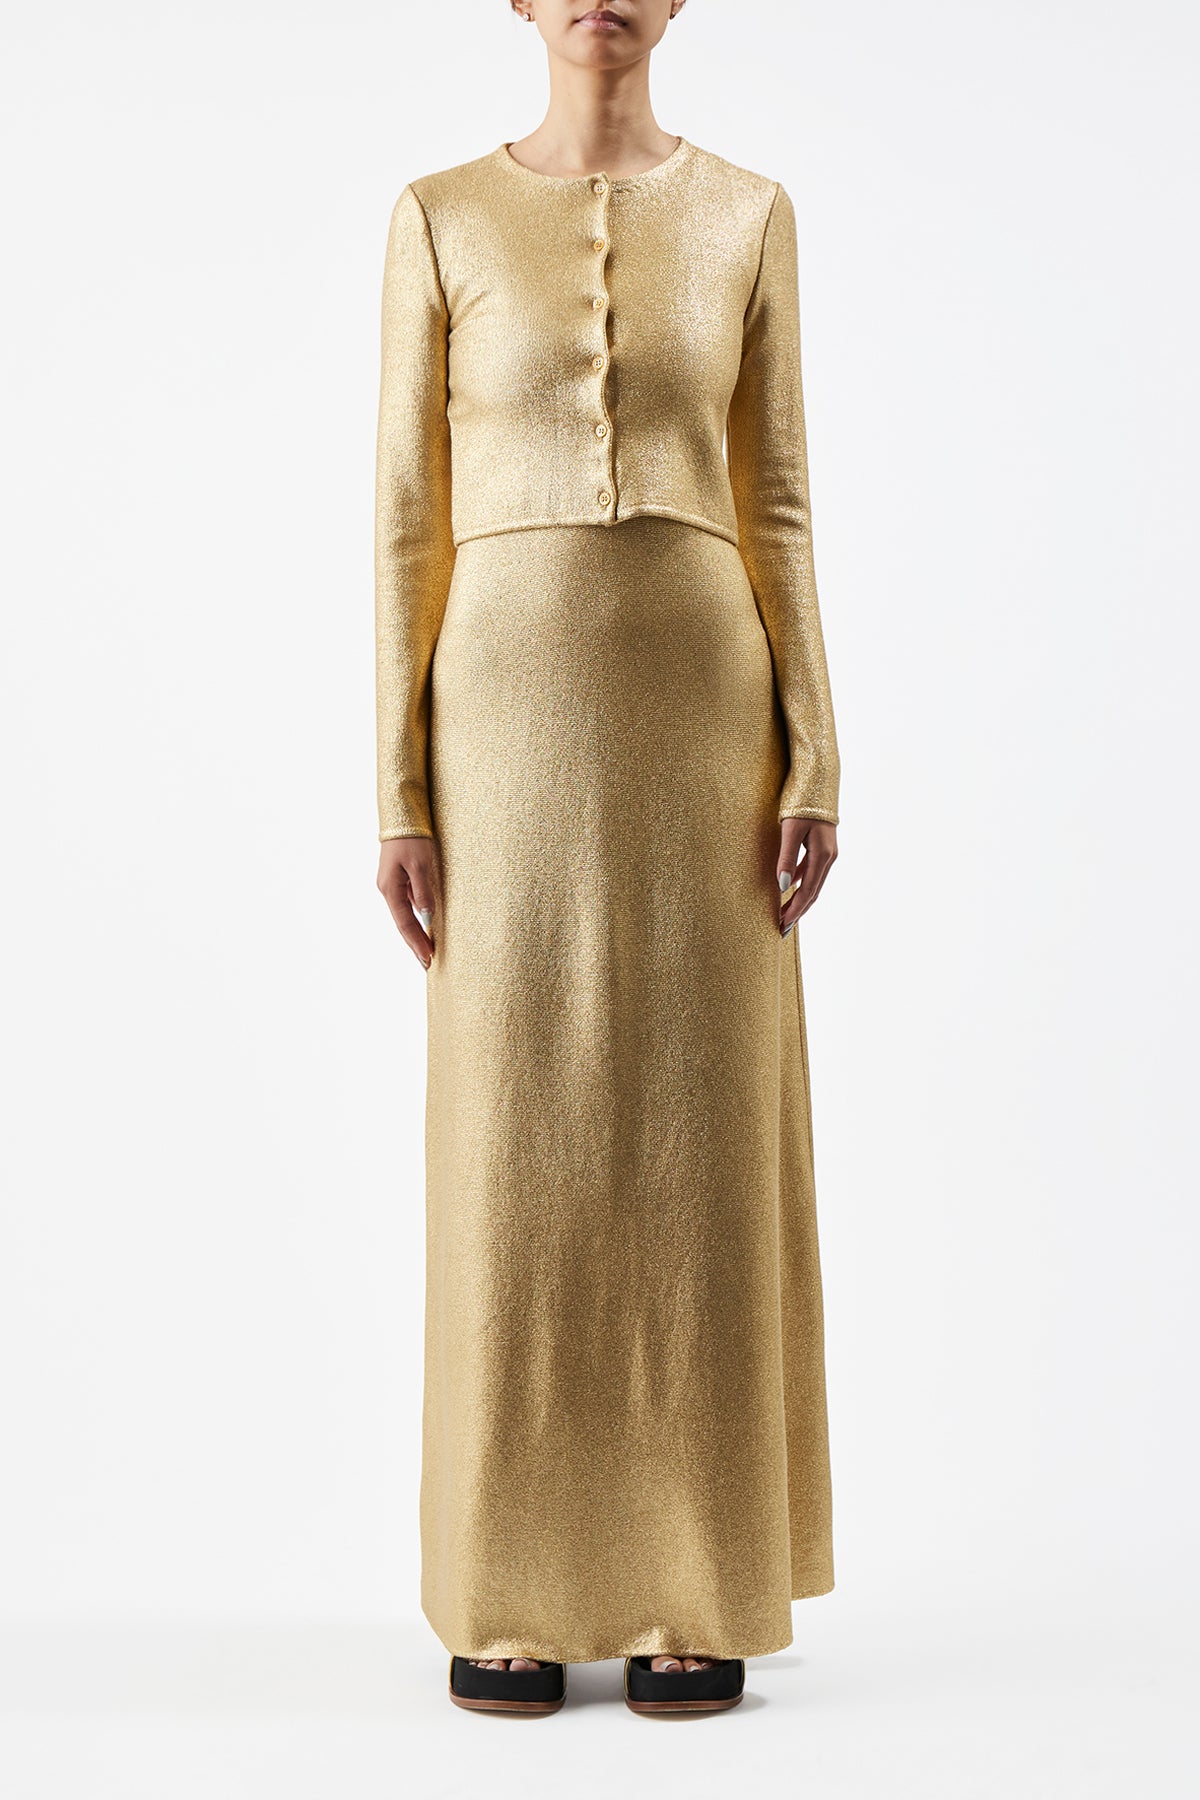 Katia Knit Cardigan in Gold Merino Wool